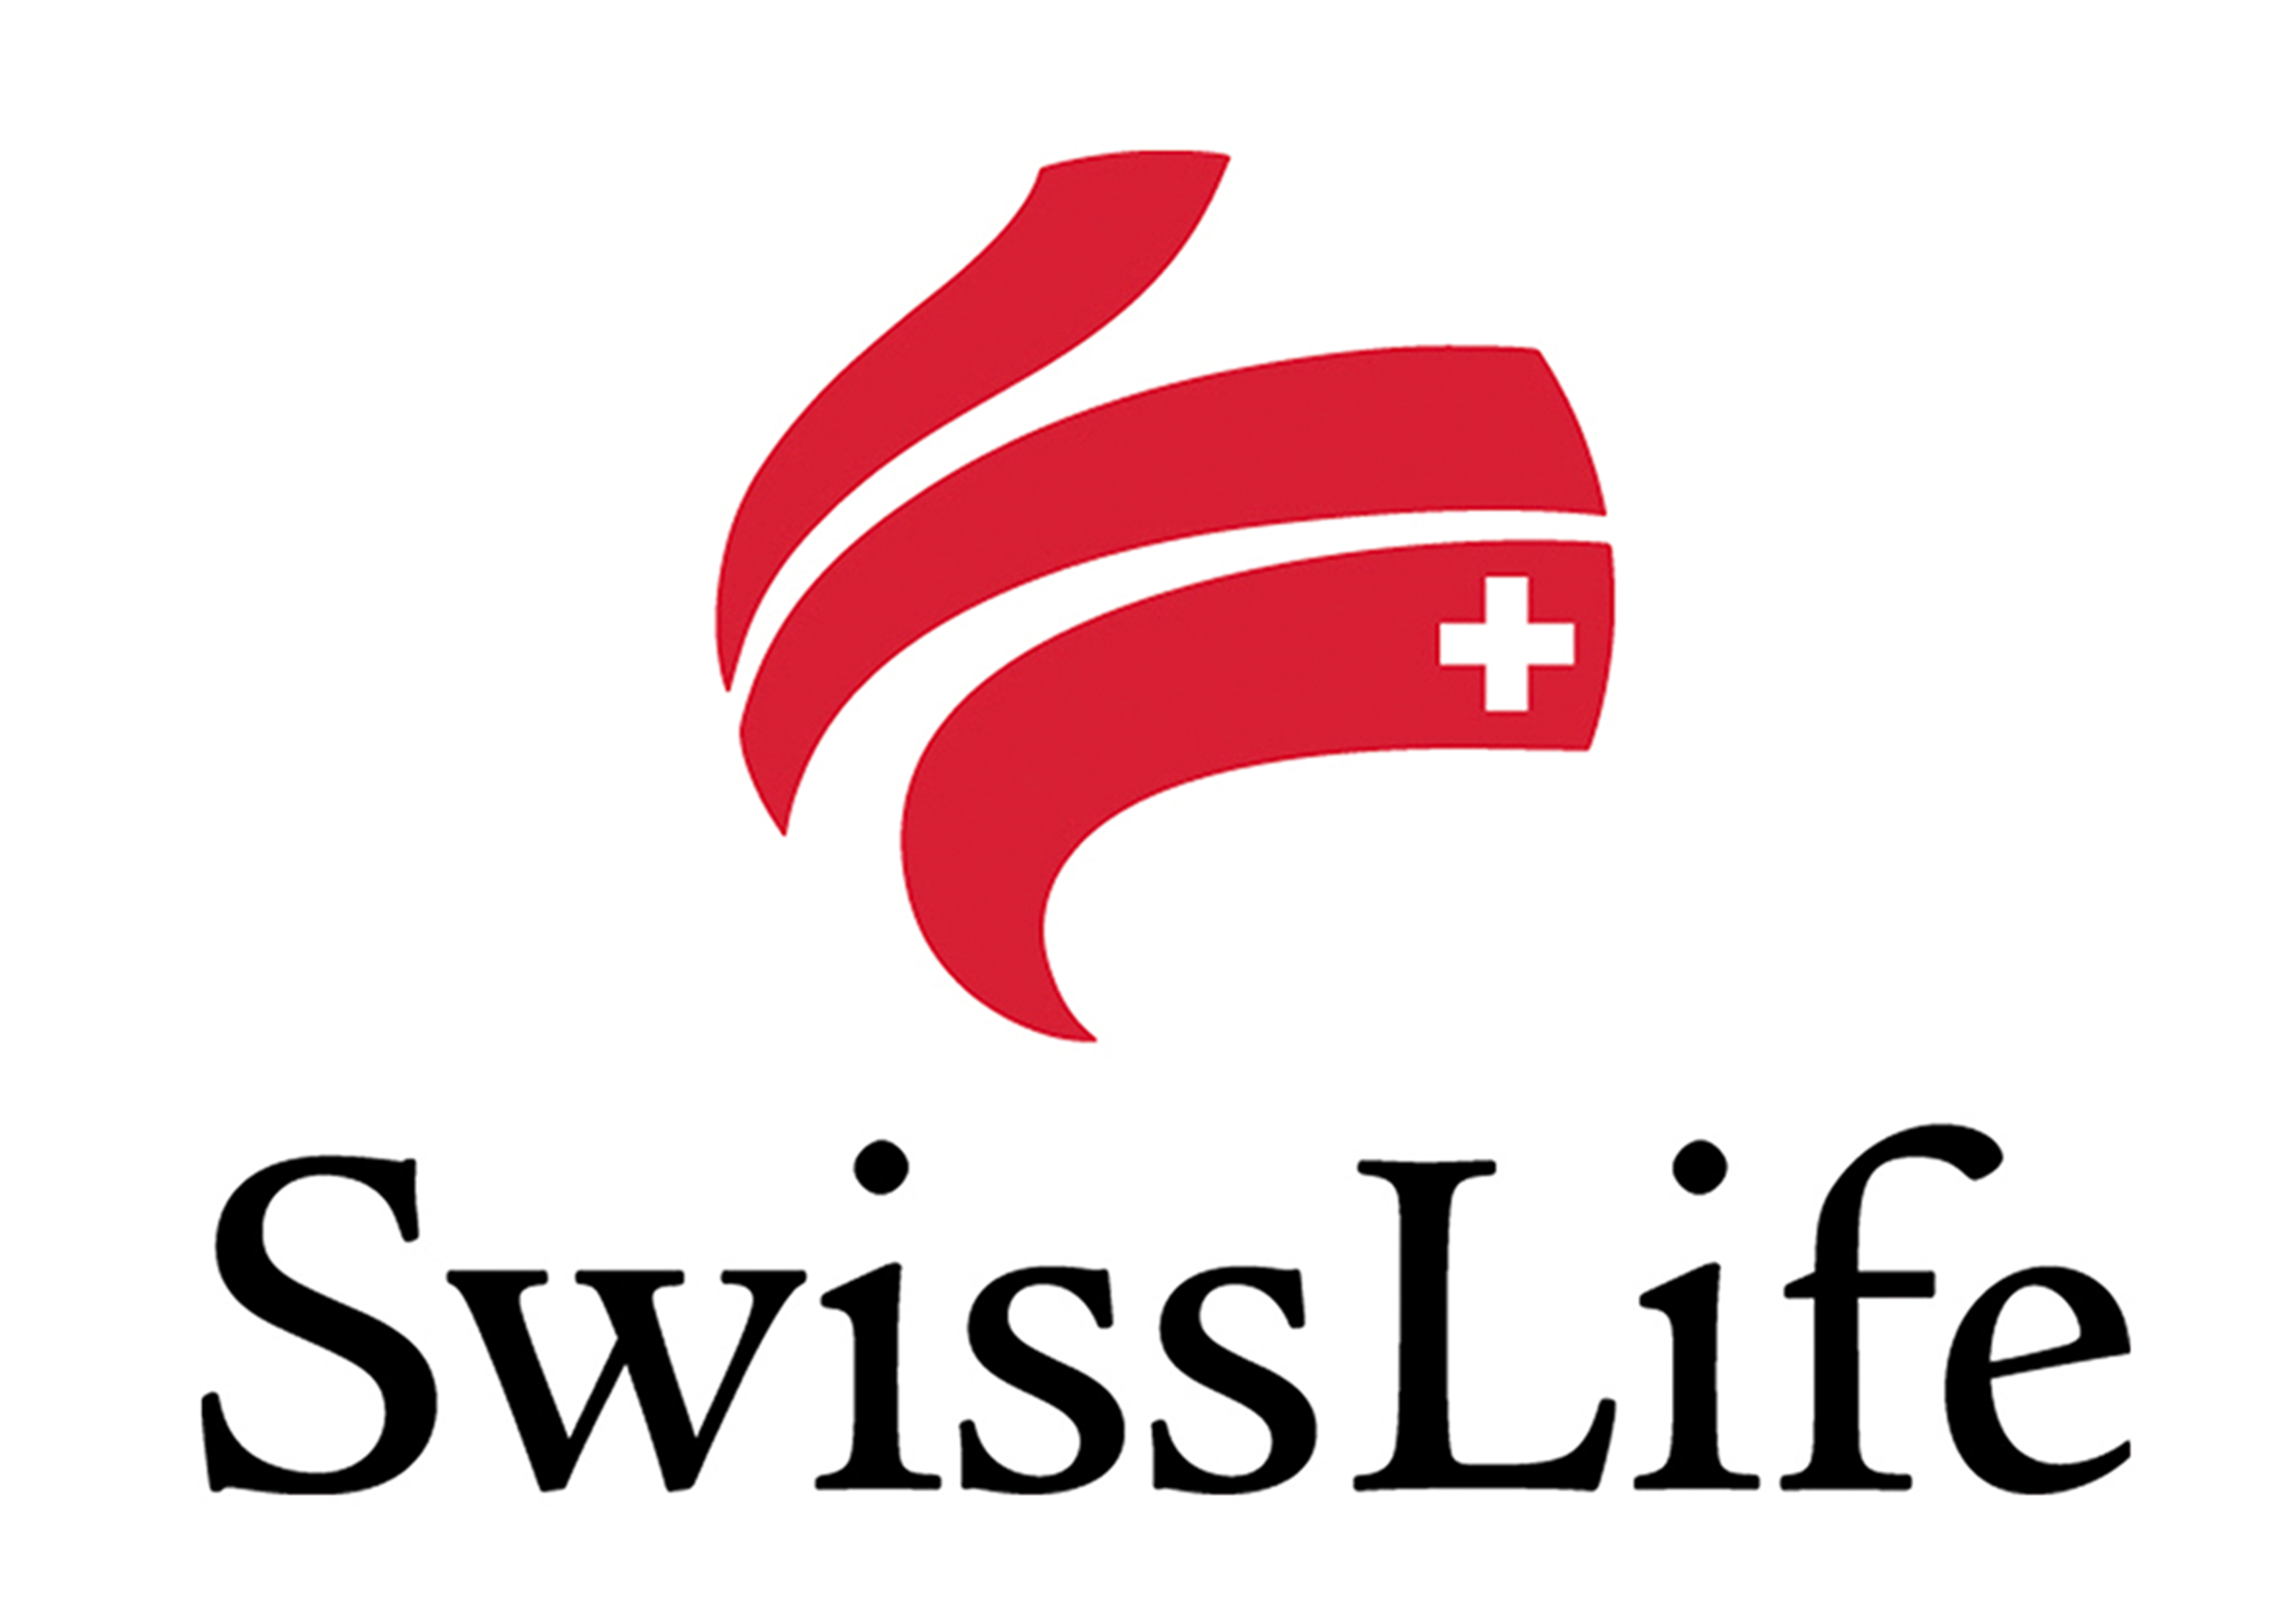 logo swiss life blanc tournant